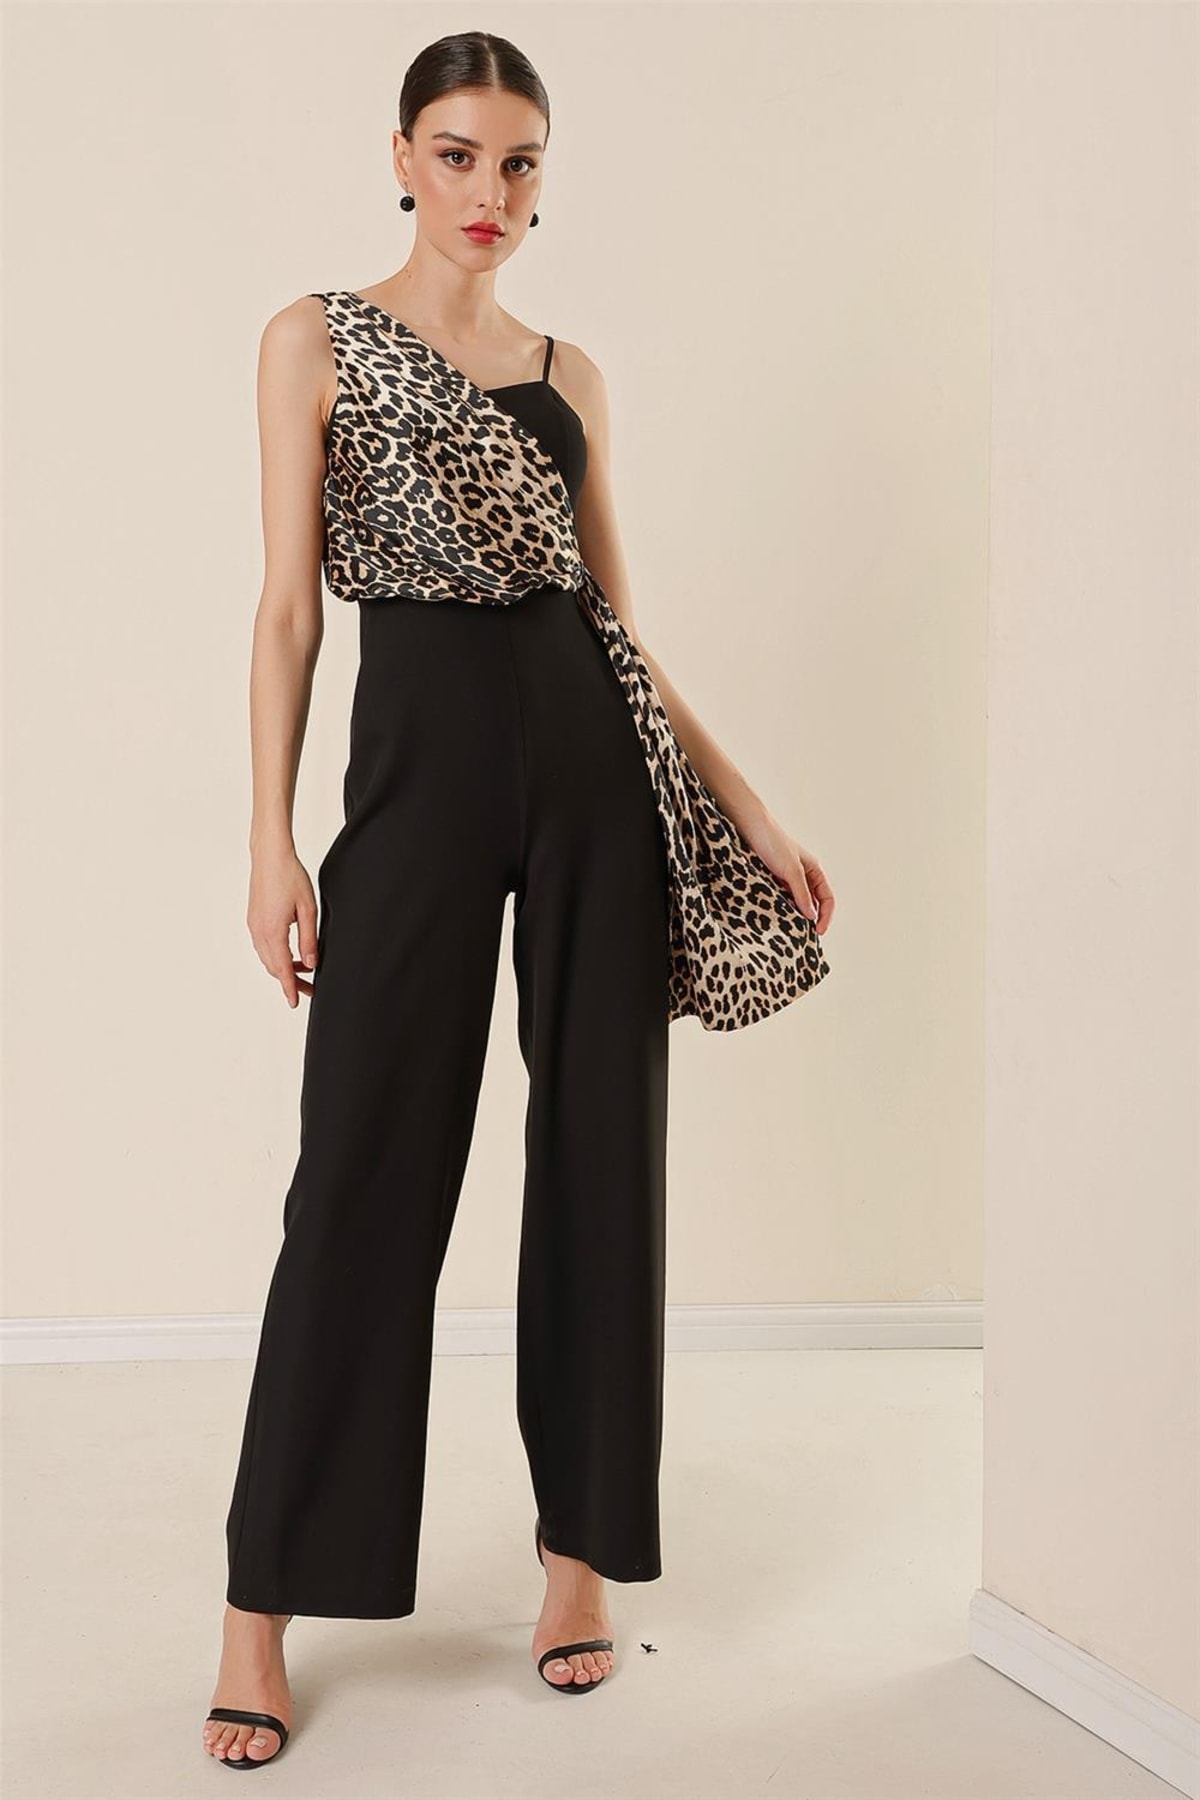 By Saygı One Side Thick Straps Leopard Pattern Satin Detailed Wide Leg Jumpsuit Black.